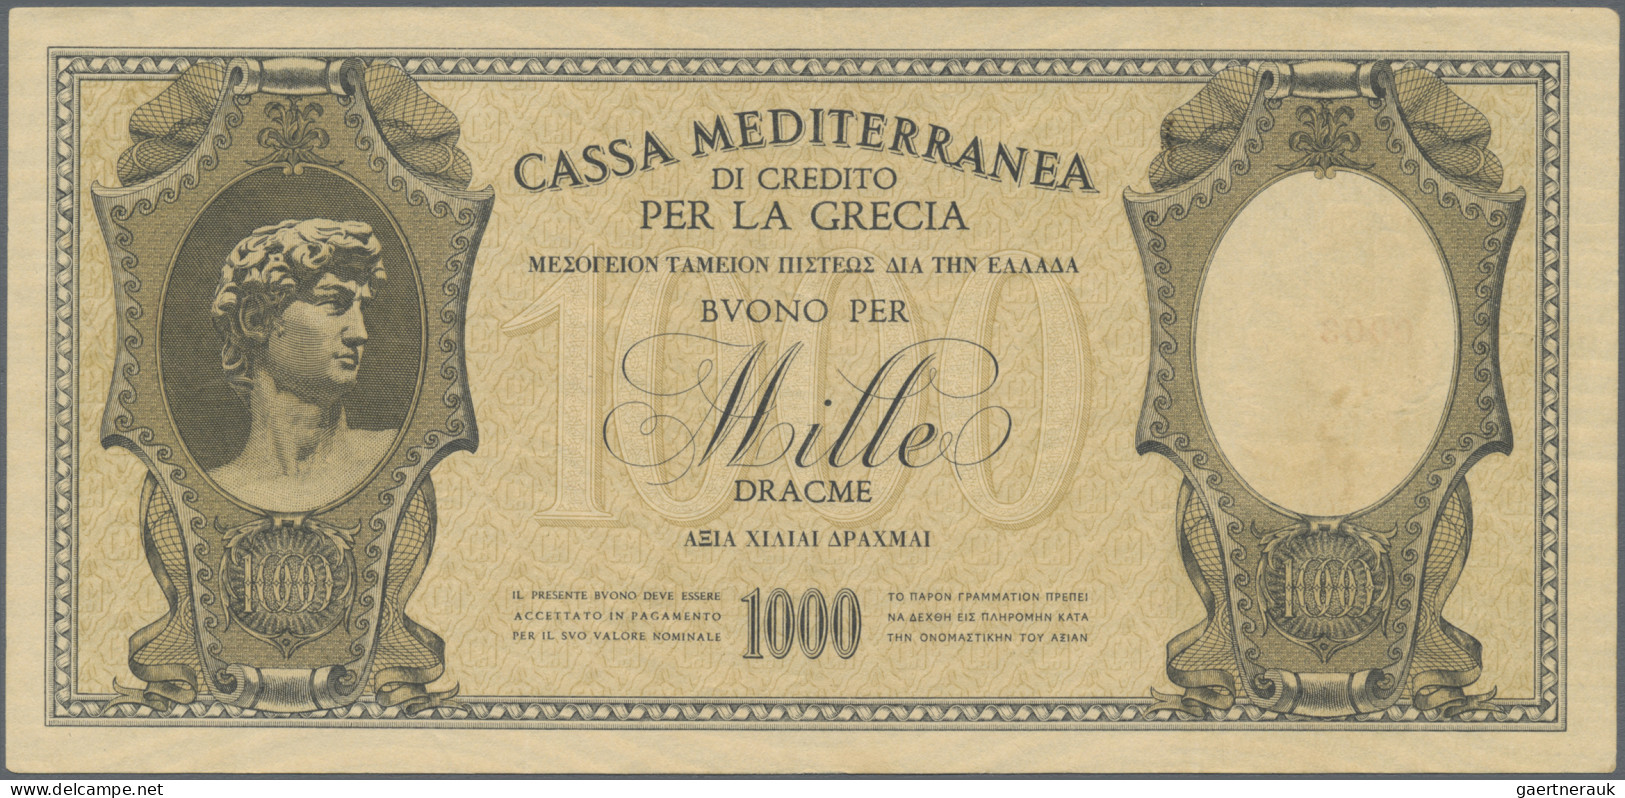 Greece: Cassa Mediterranea per la Grecia, nice set with 4 banknotes ND(1941) ser